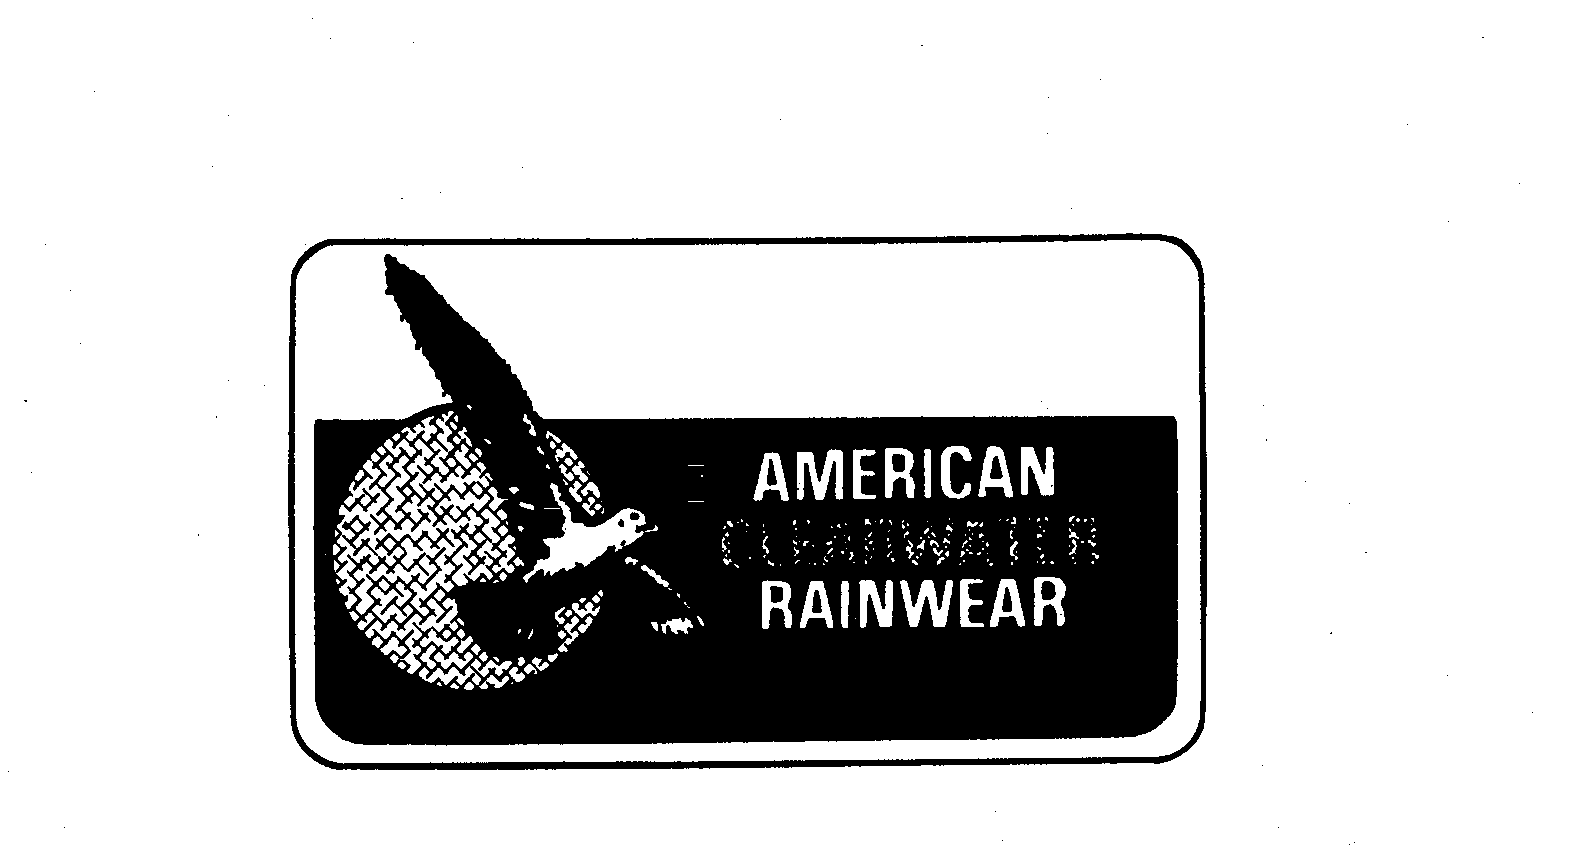  AMERICAN CLEARWATER RAINWEAR